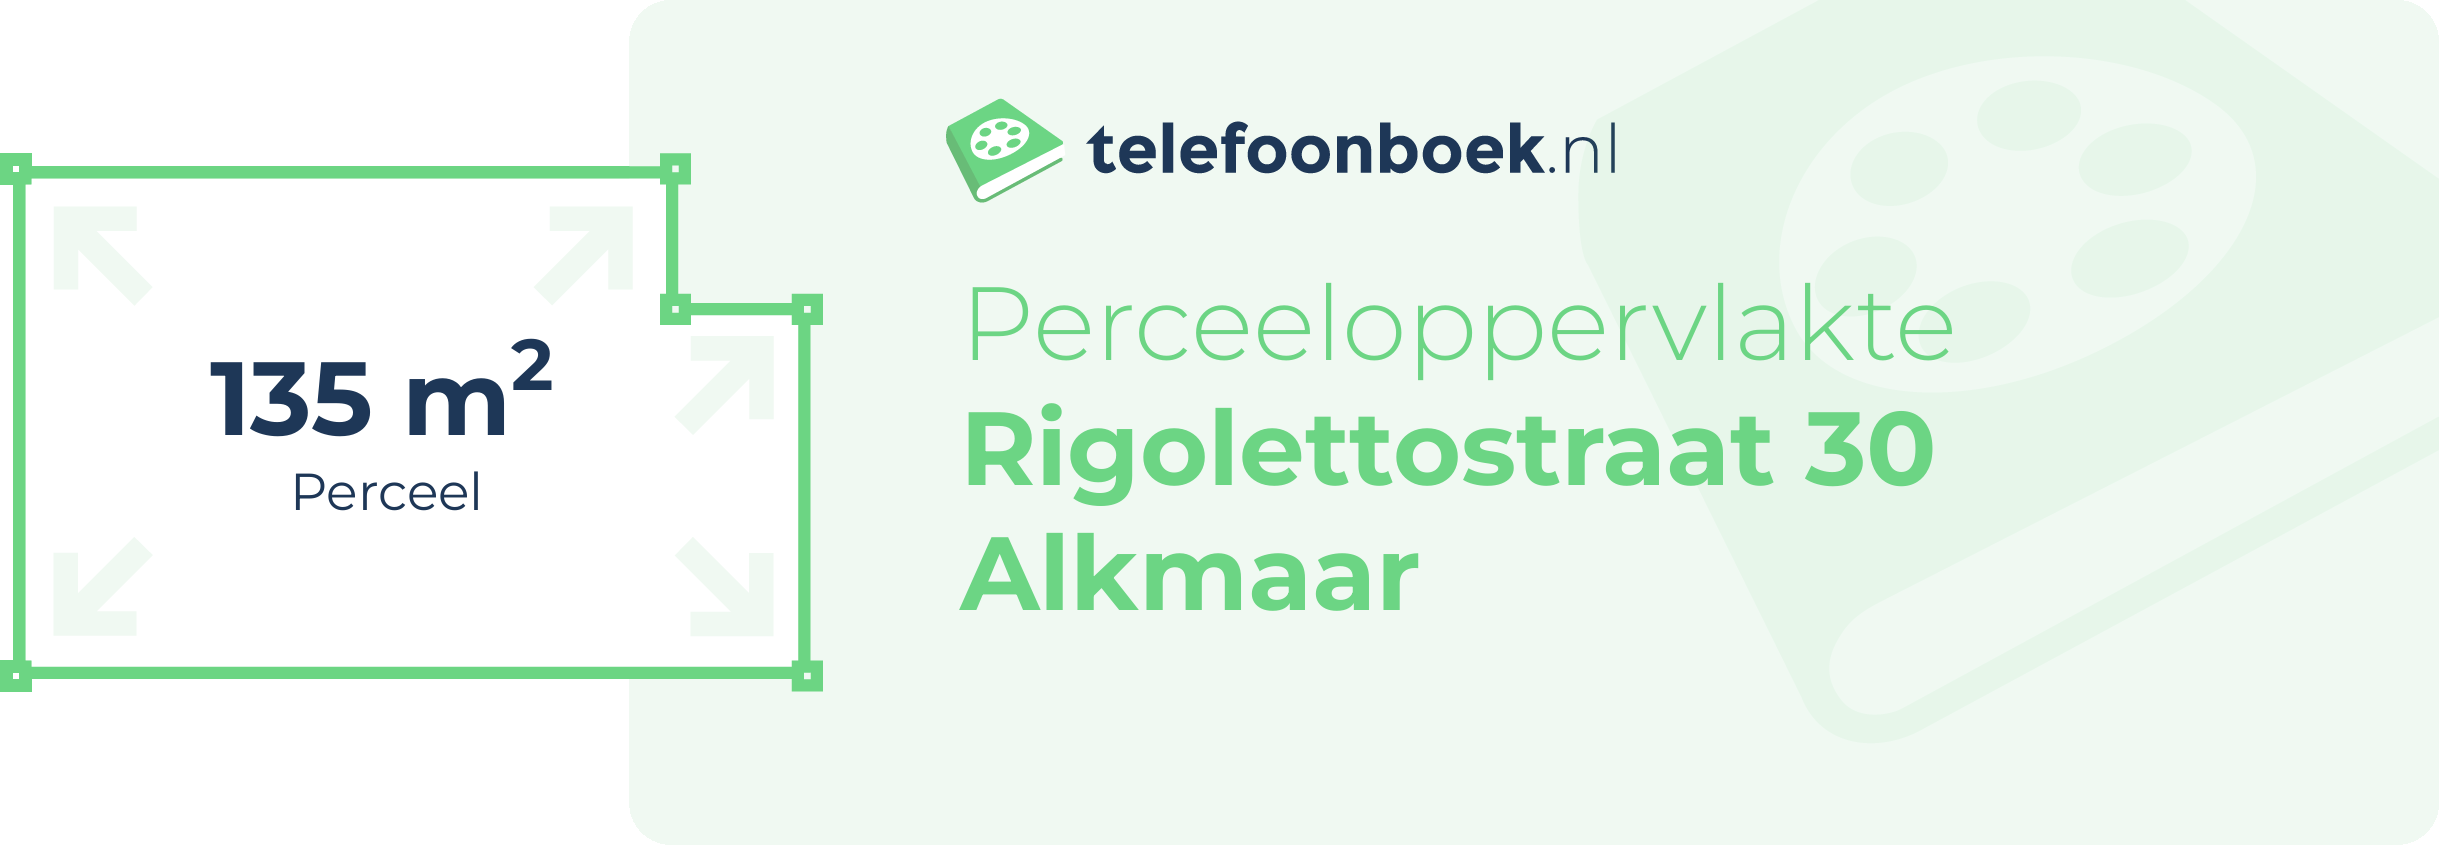 Perceeloppervlakte Rigolettostraat 30 Alkmaar